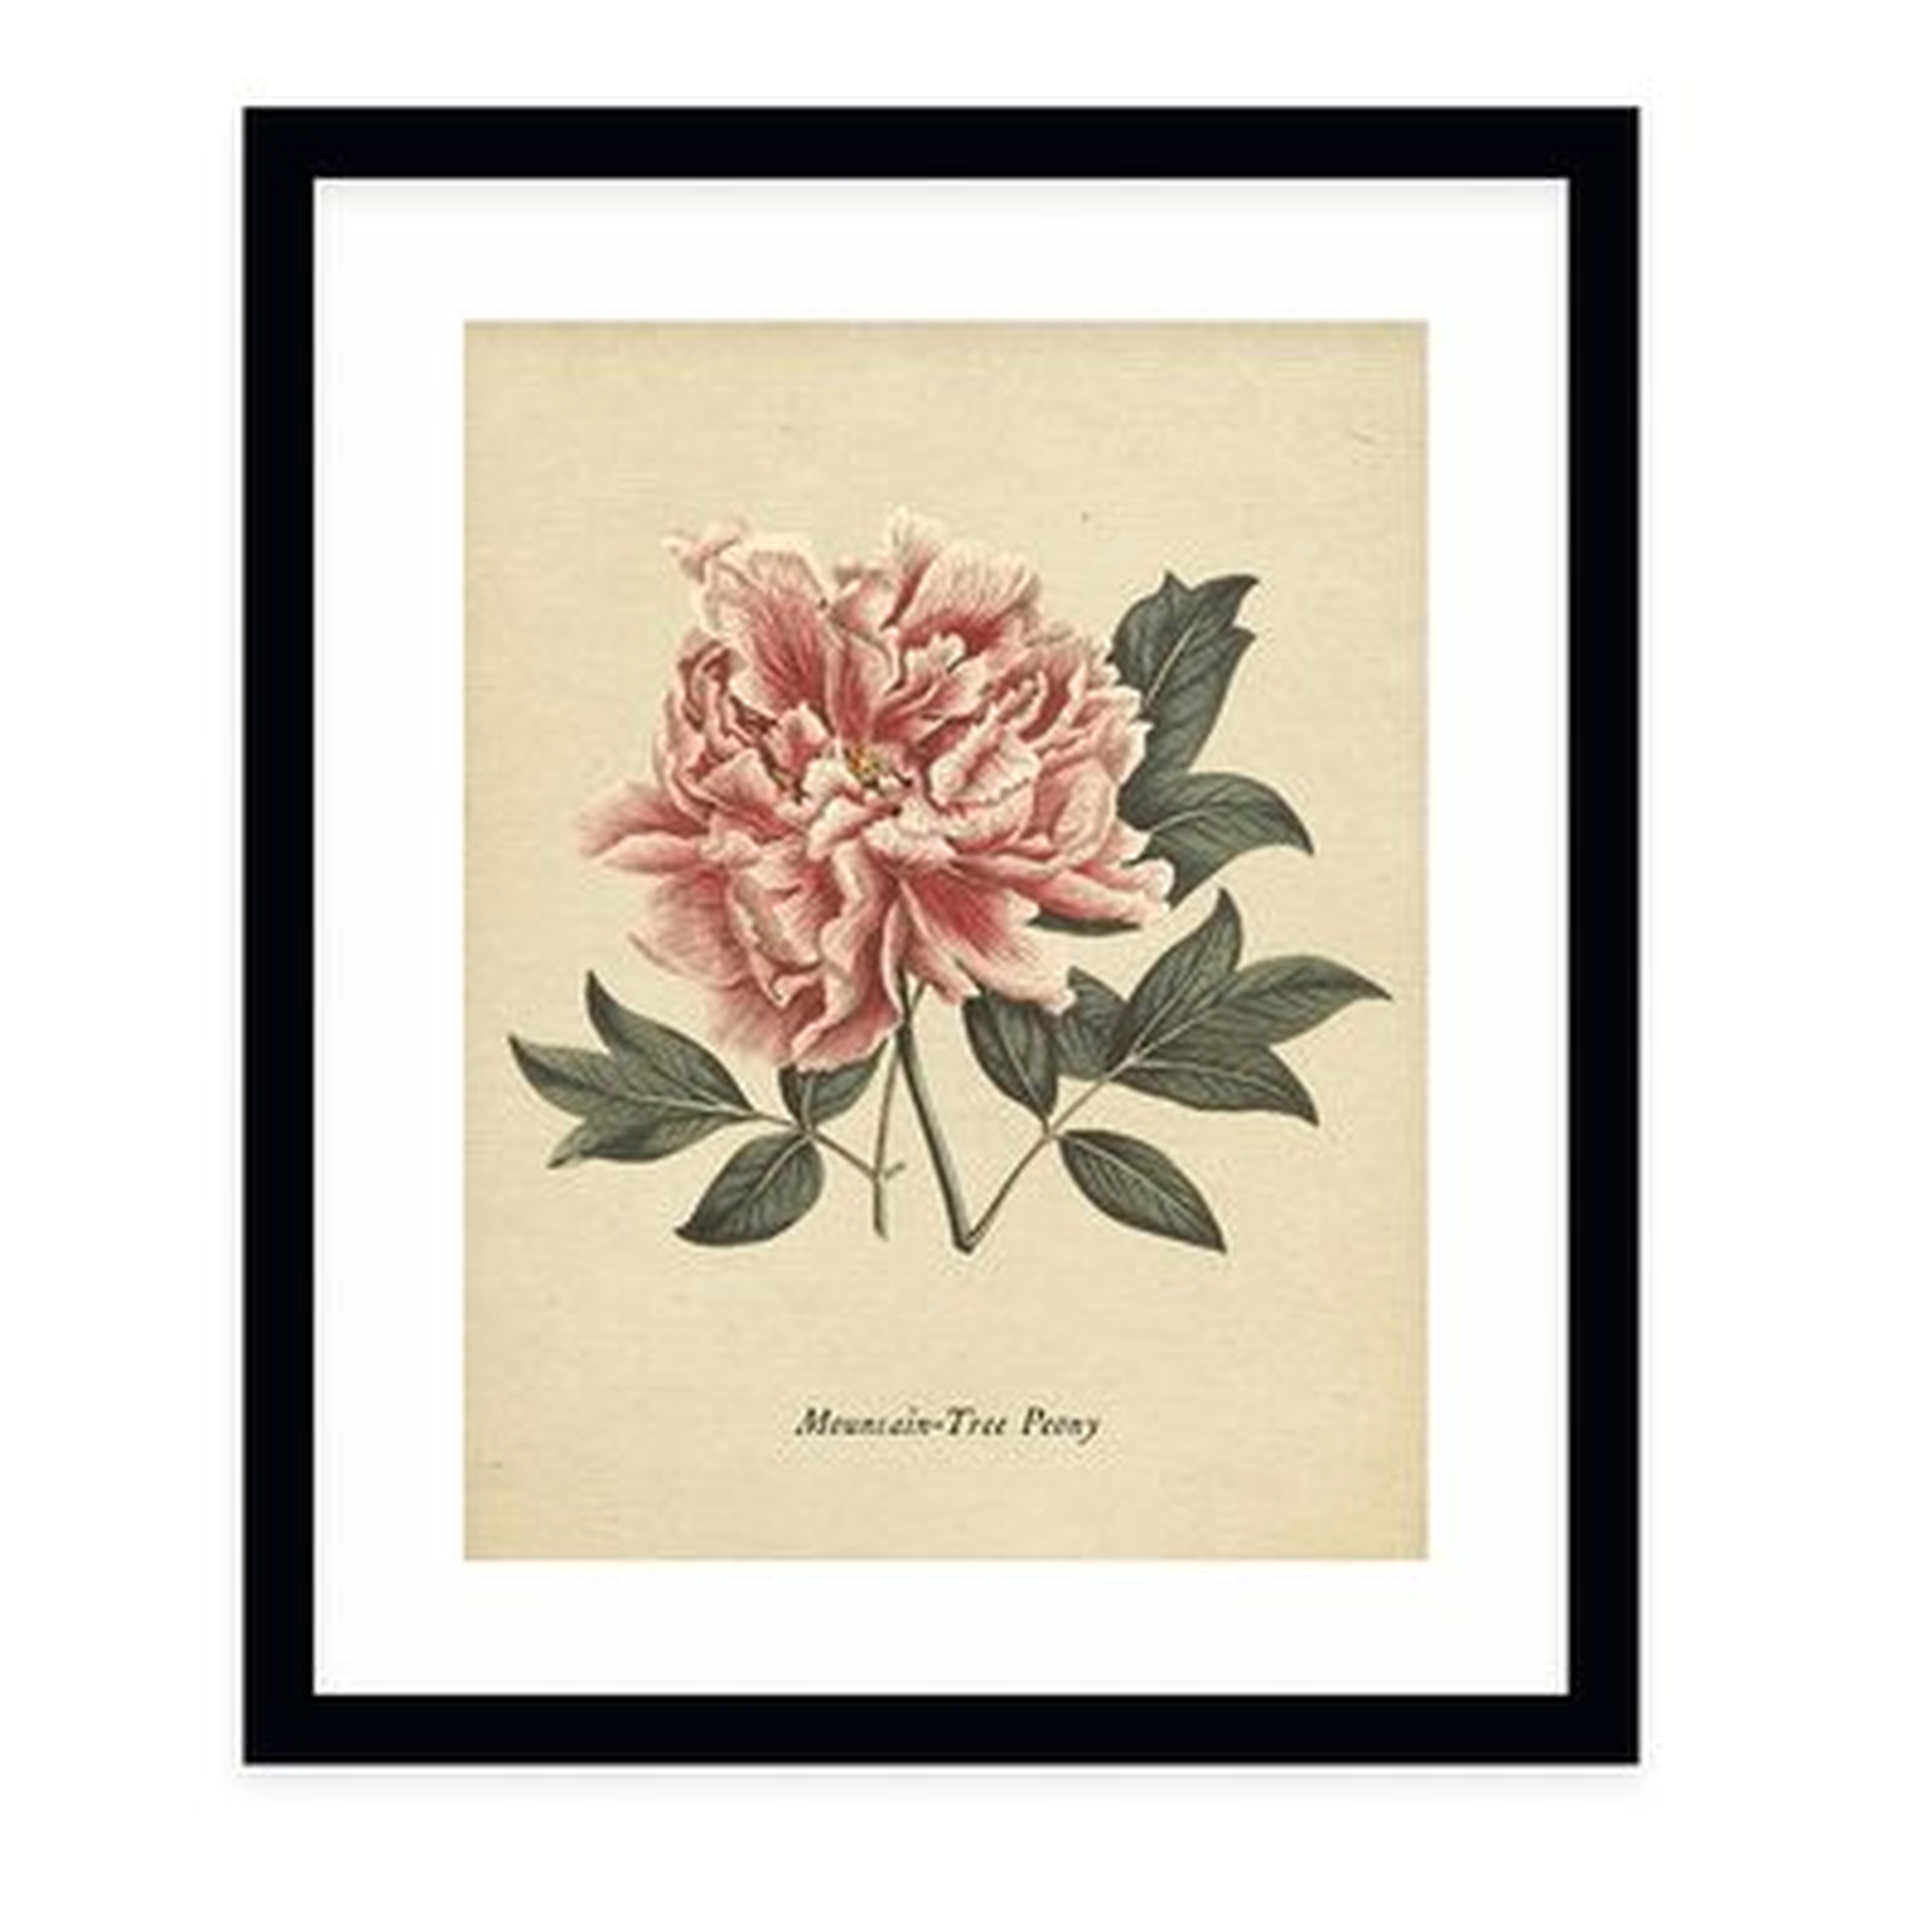 'Botanical Vintage Eight' - Picture Frame Graphic Art Print on Paper - Birch Lane